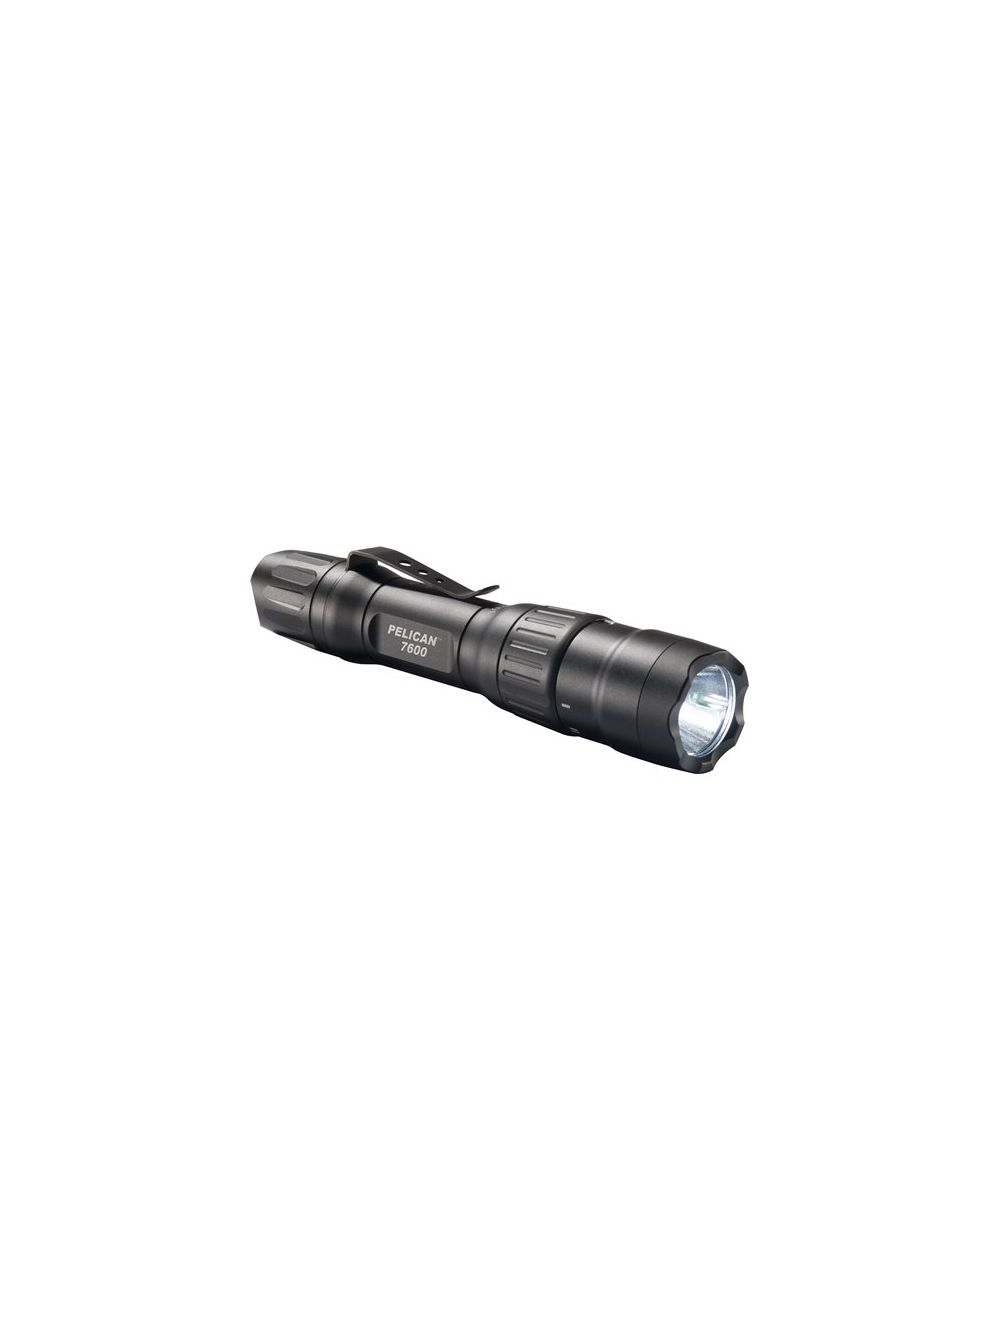 7600 Tactical Flashlight